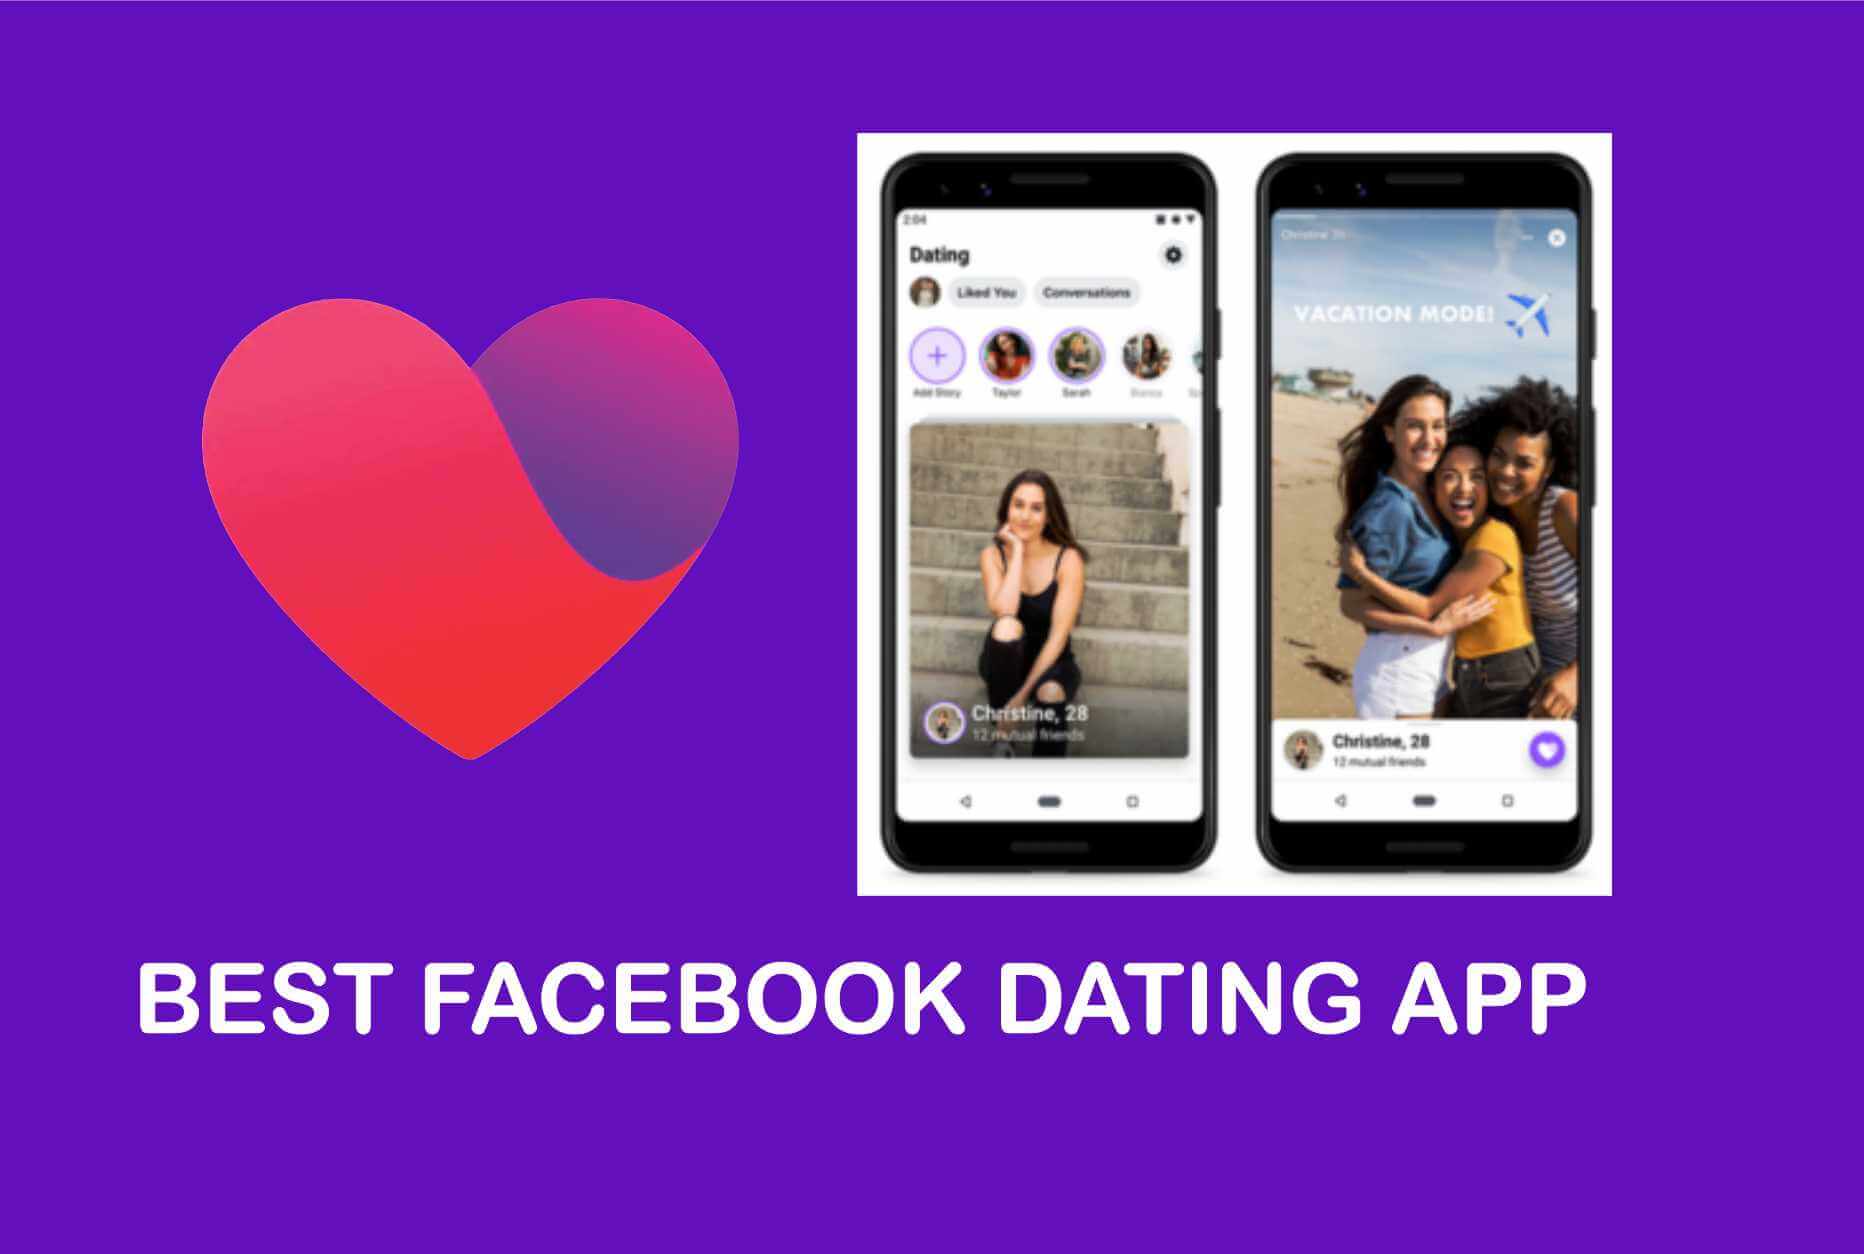 Best Facebook Dating App - All About Facebook Dating App